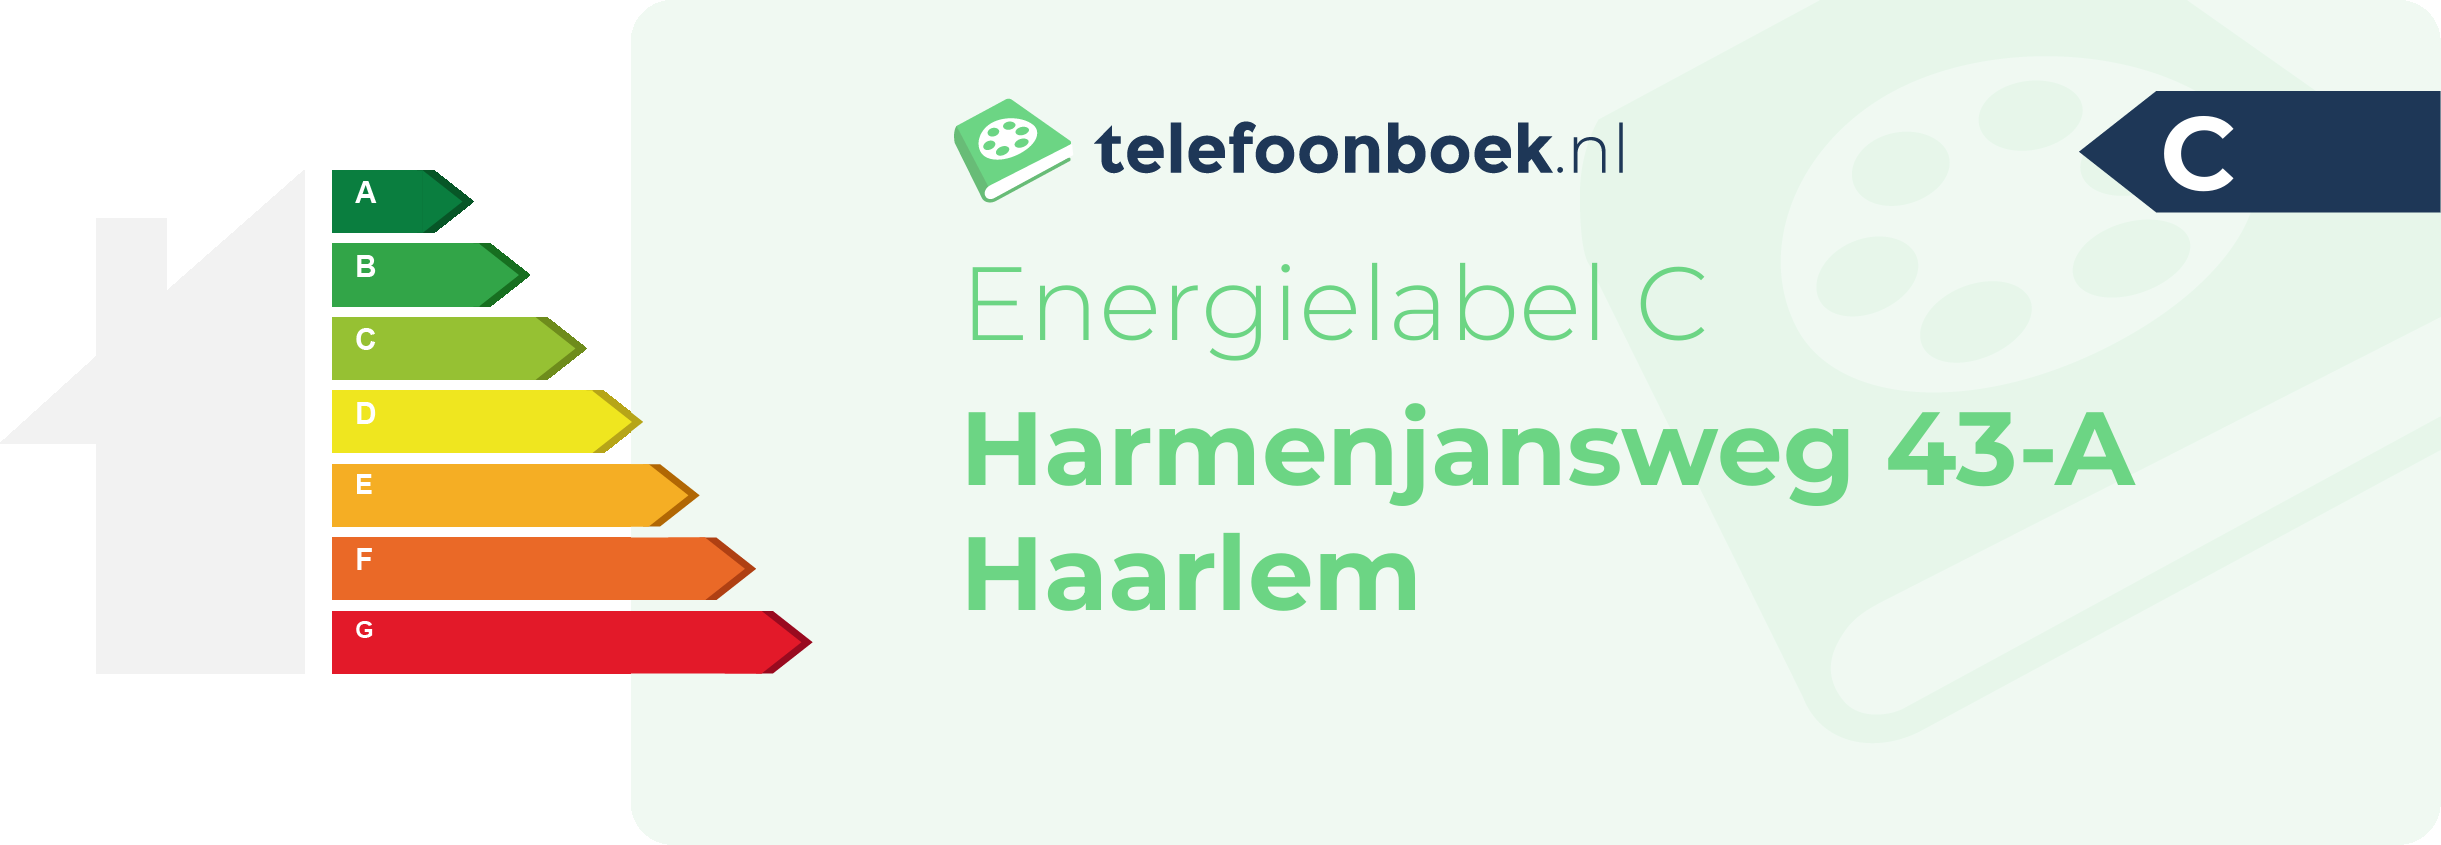 Energielabel Harmenjansweg 43-A Haarlem